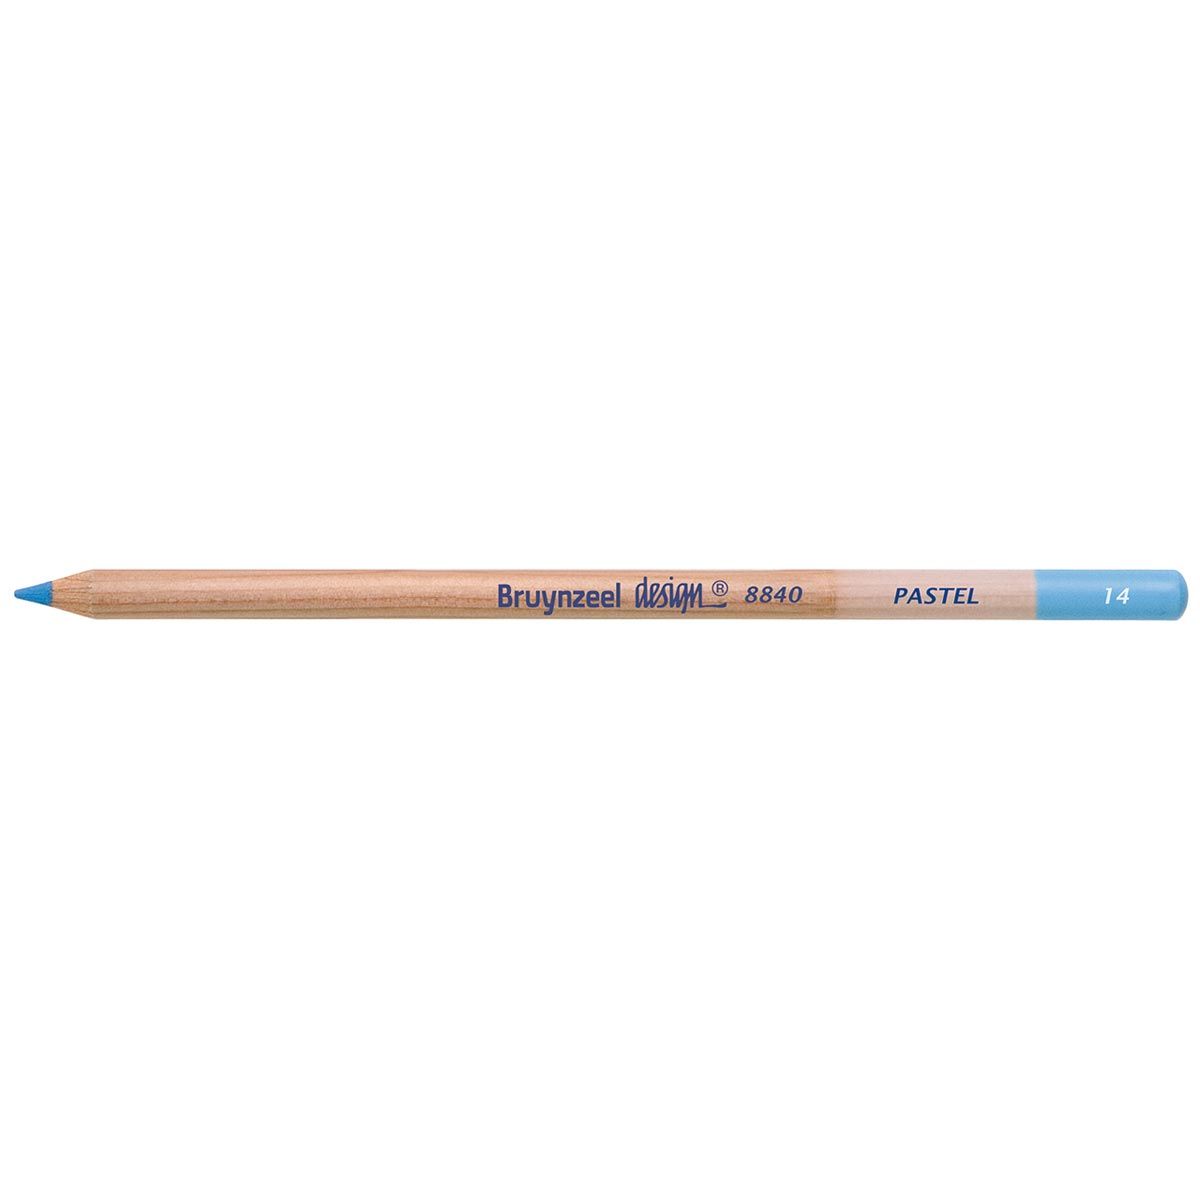 Bruynzeel Design Pastel Pencil - Smyrna Blue 14